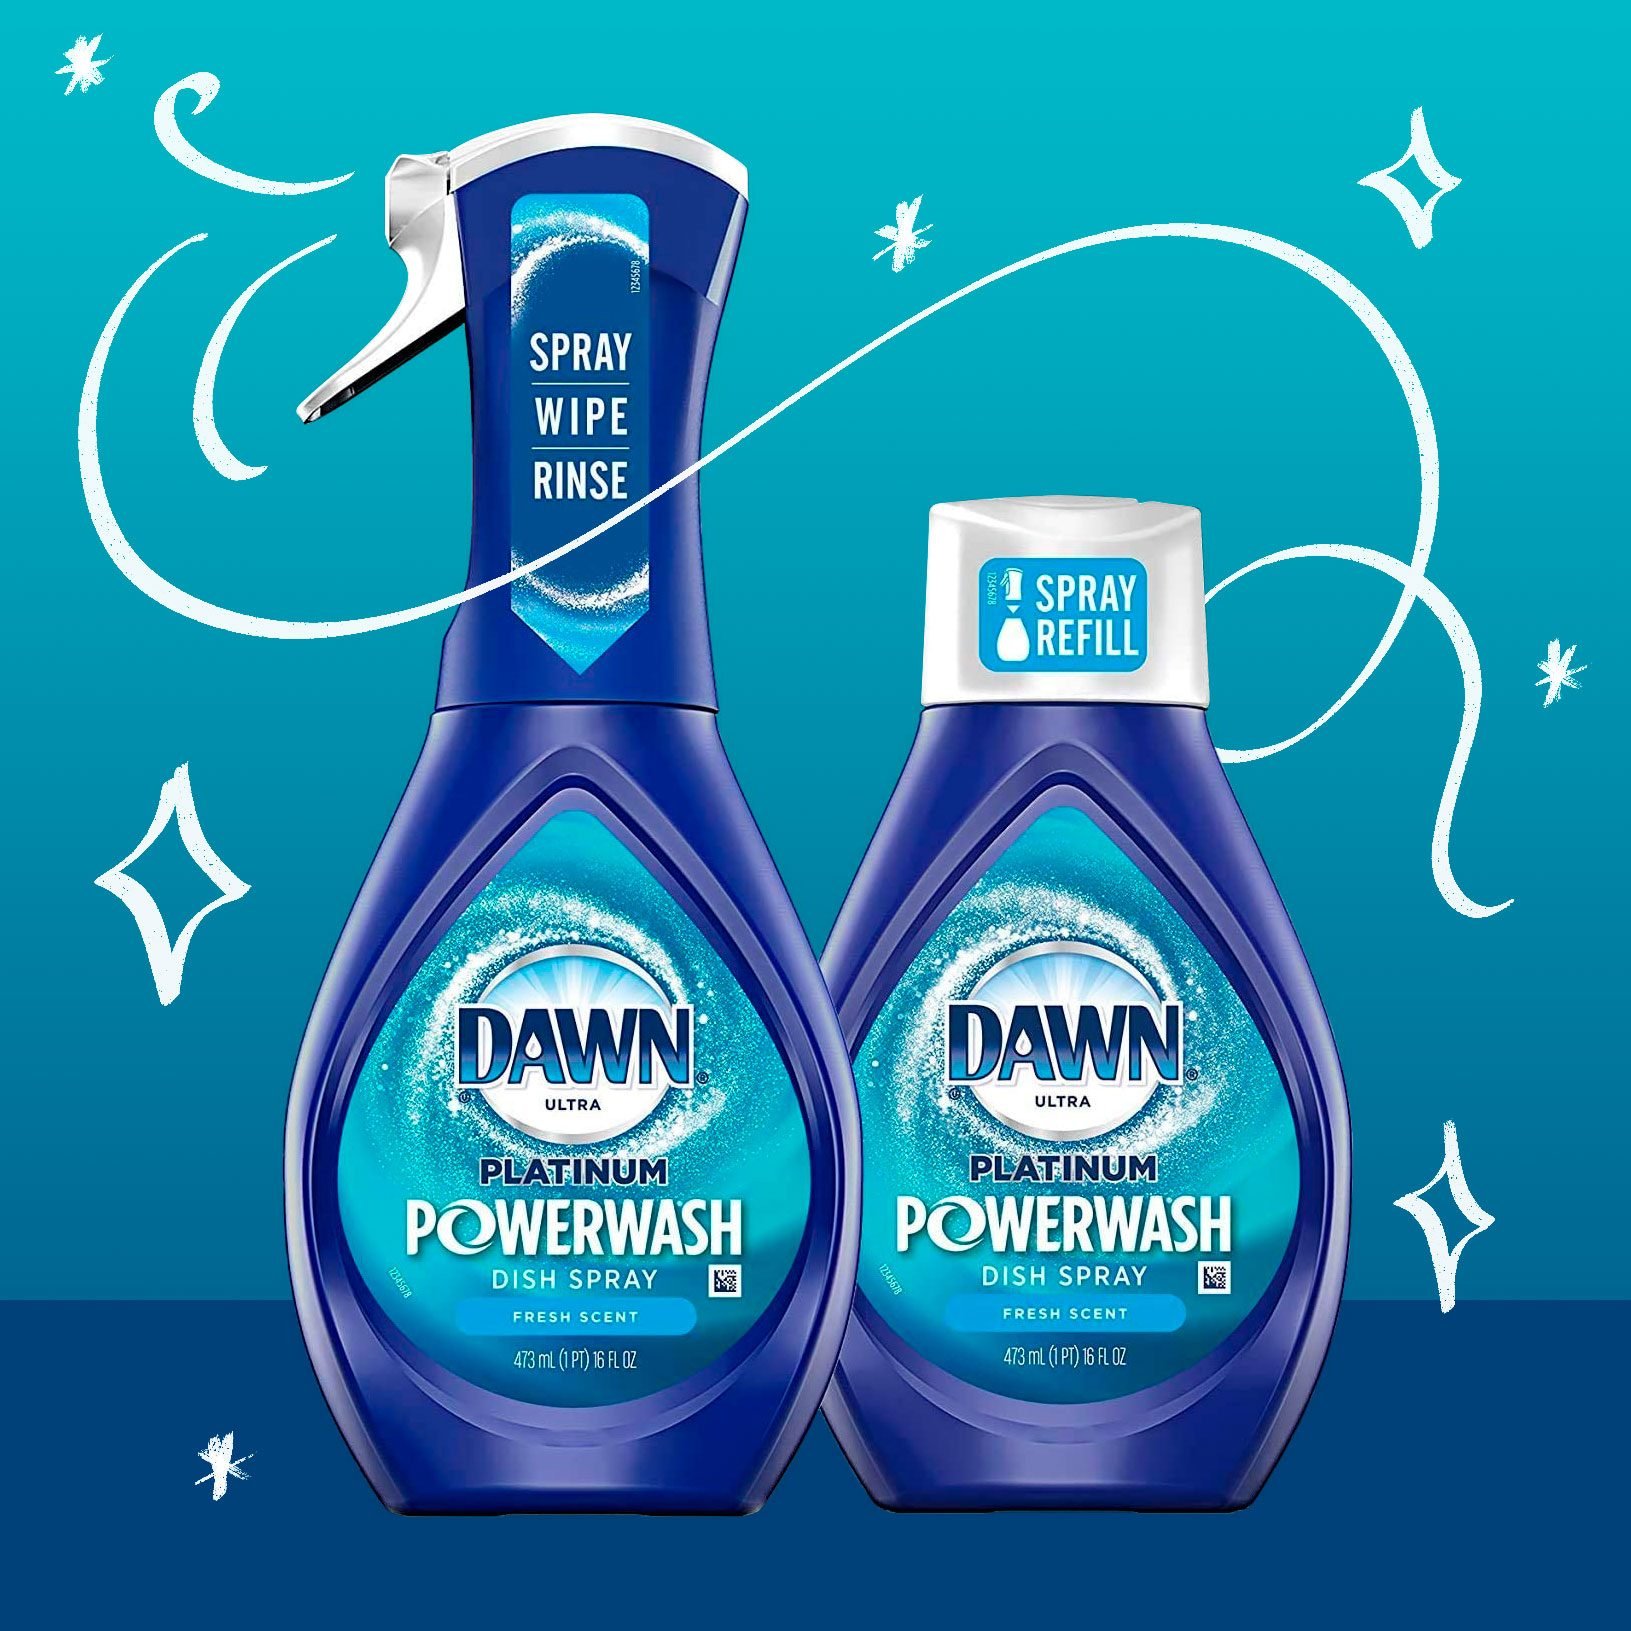 https://www.rd.com/wp-content/uploads/2021/04/Dawn-Powerwash-Spray-Starter-Kit-via-amazon.jpg?fit=700%2C1024